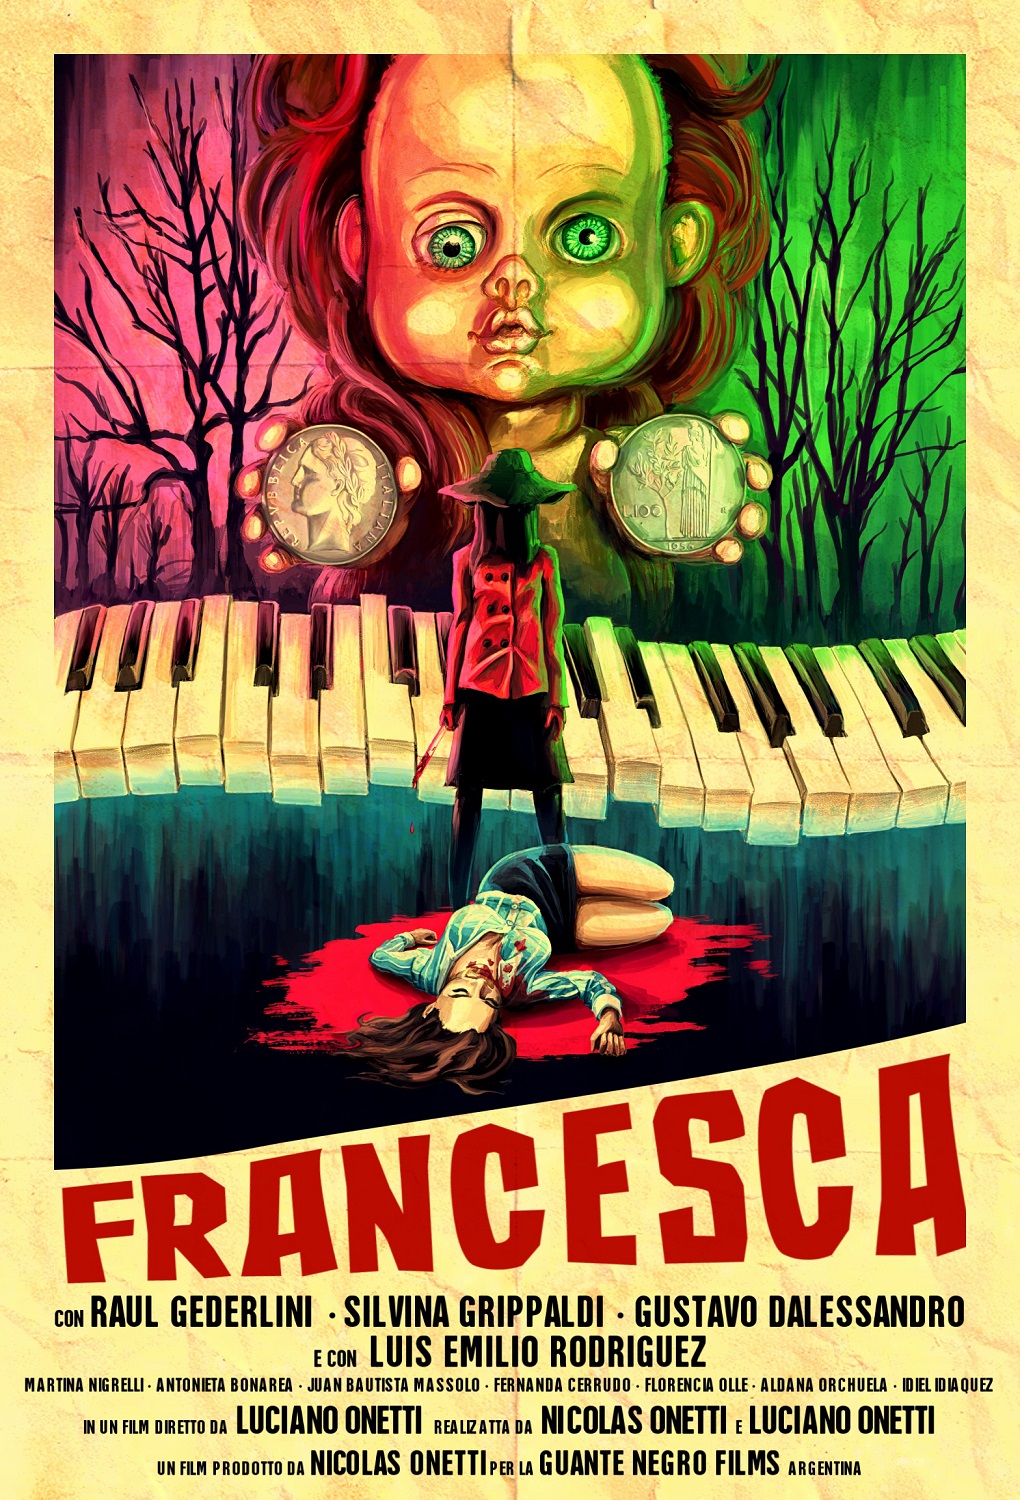 Francesca Gets North American Distribution